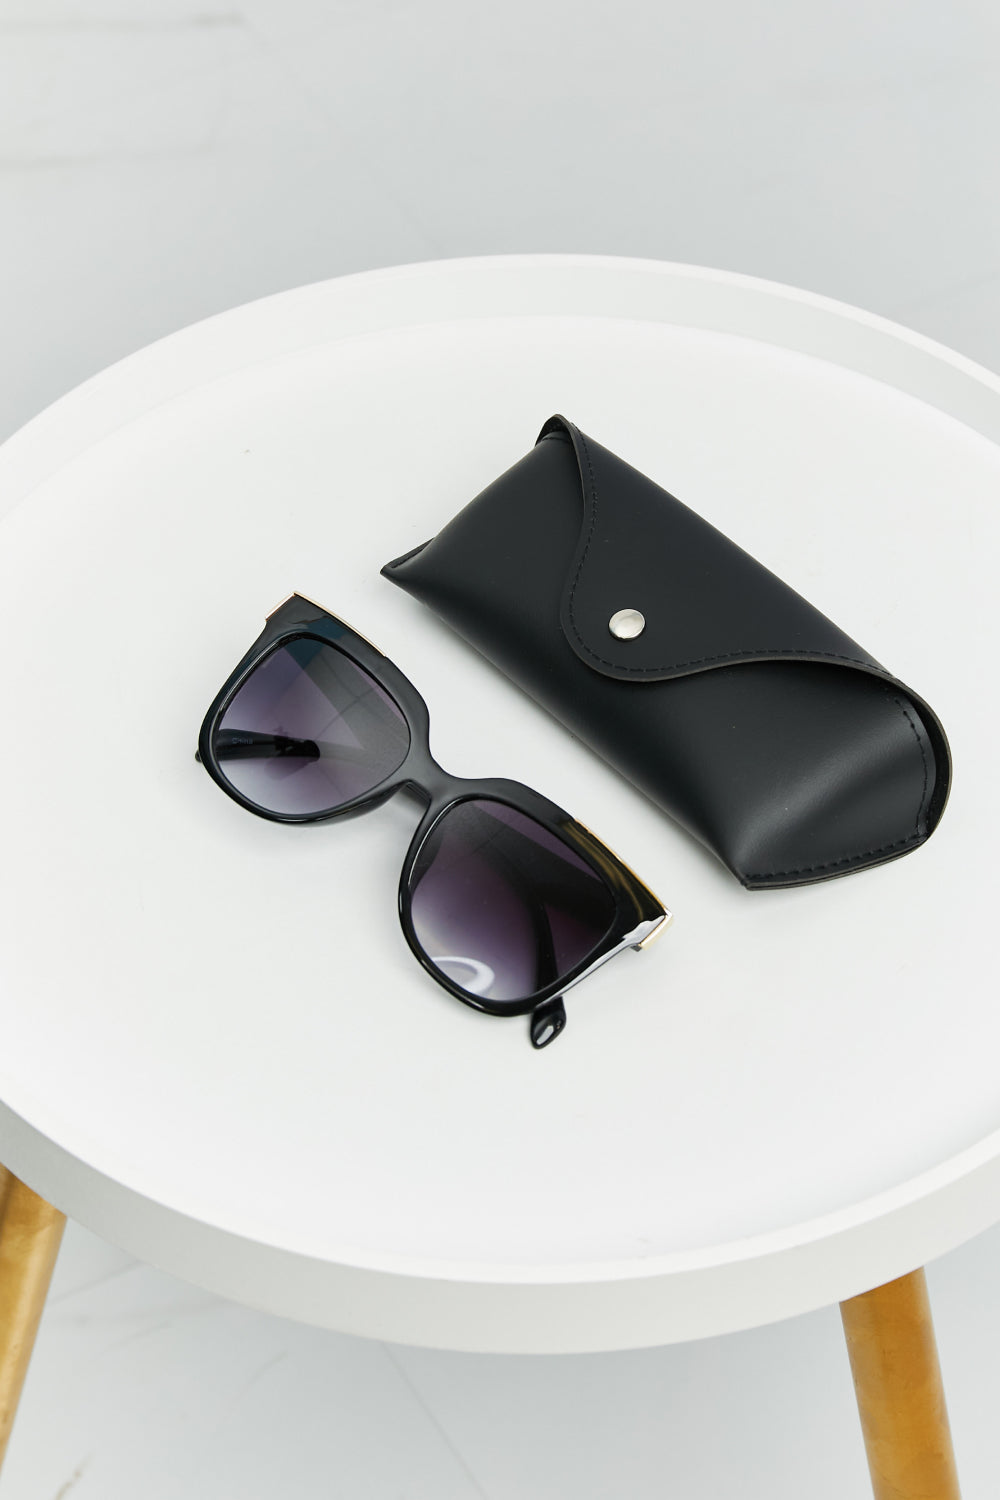 Sunglasses Aesthetic |  Square TAC Polarization Lens Sunglasses